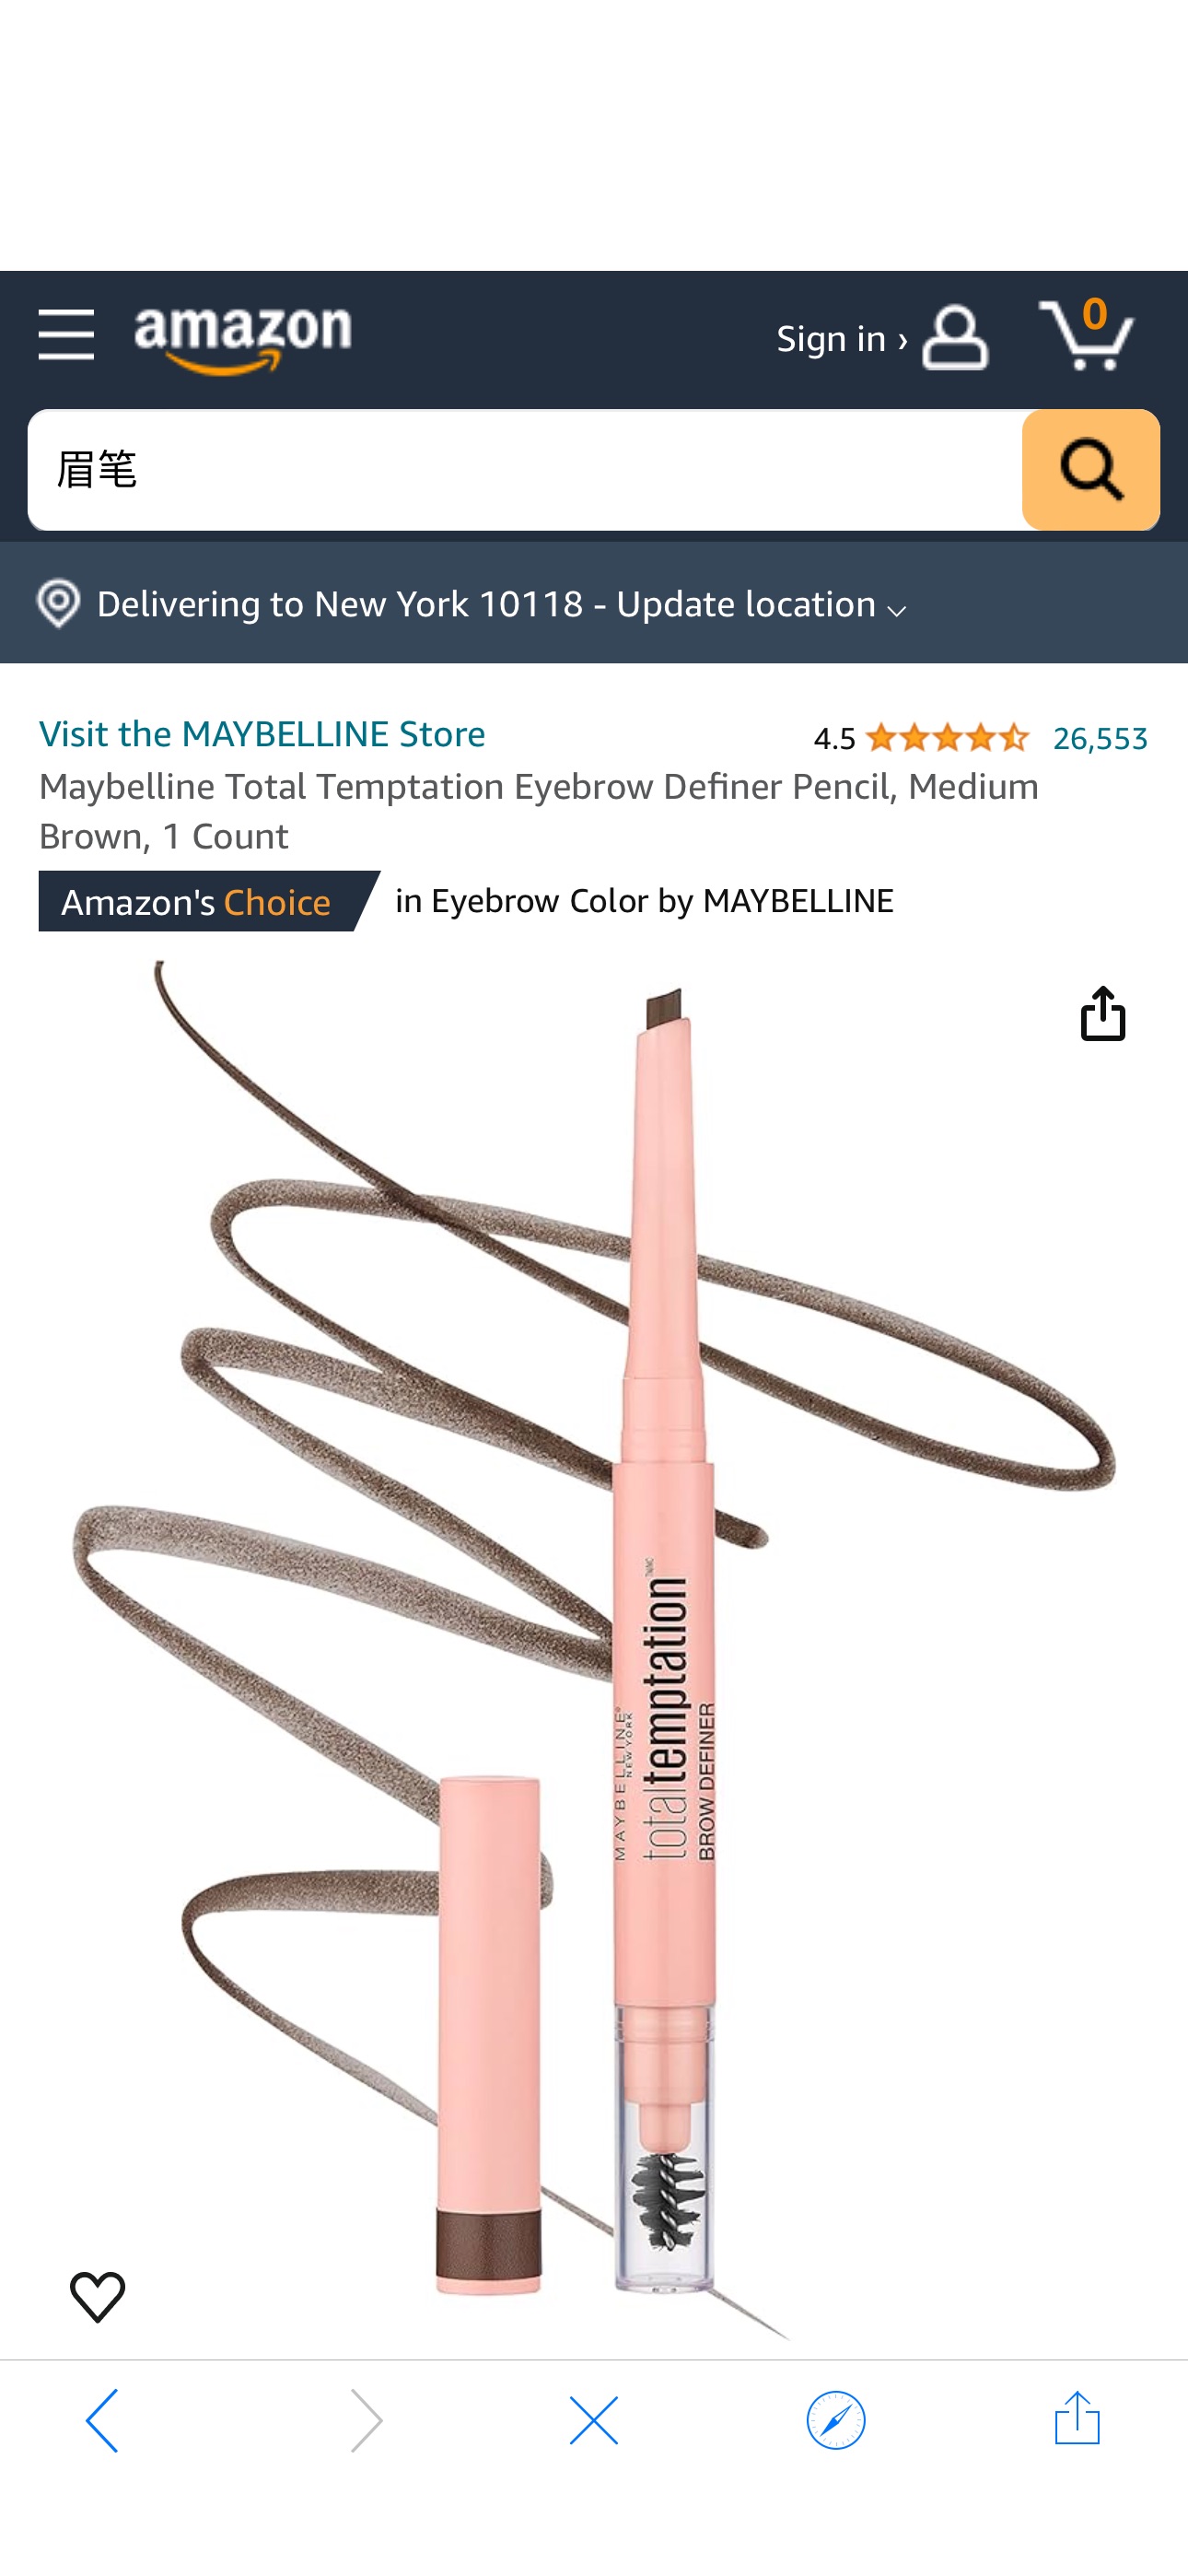 Amazon.com : Maybelline Total Temptation Eyebrow Definer Pencil, Medium Brown, 1 Count : Beauty & Personal Care